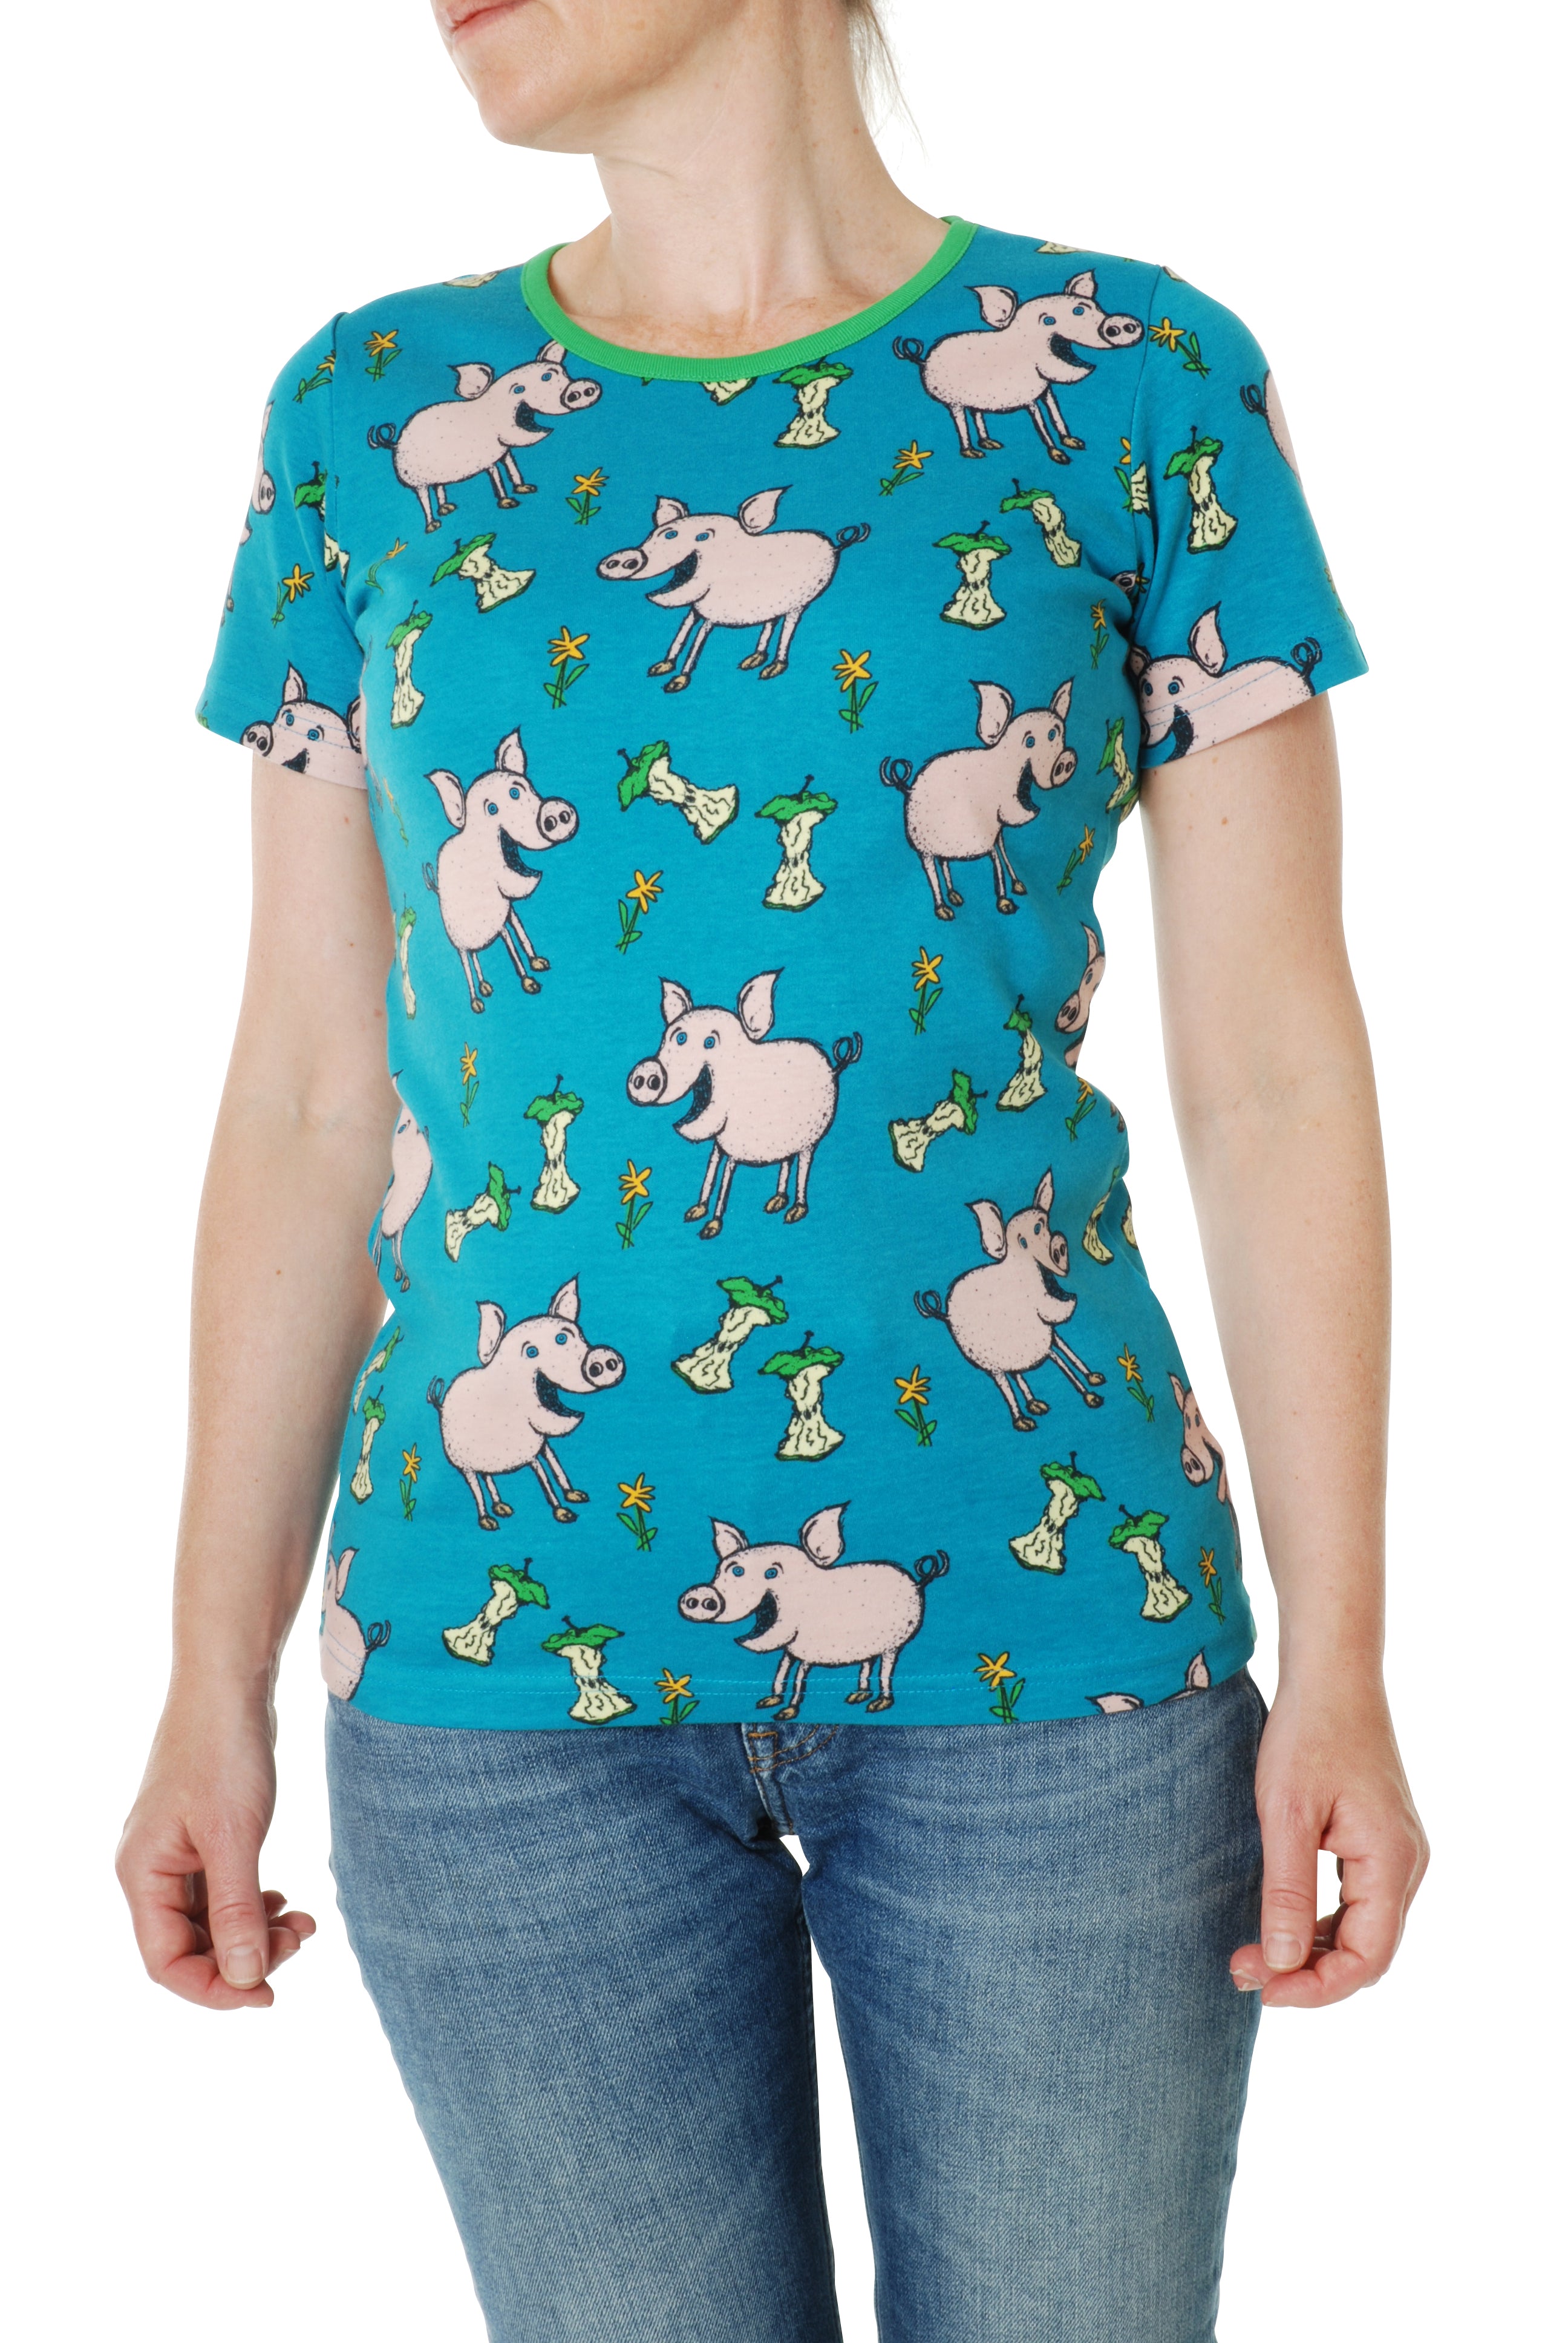 T-shirt Adult / Short Sleeve Top Pig Teal - Duns Sweden